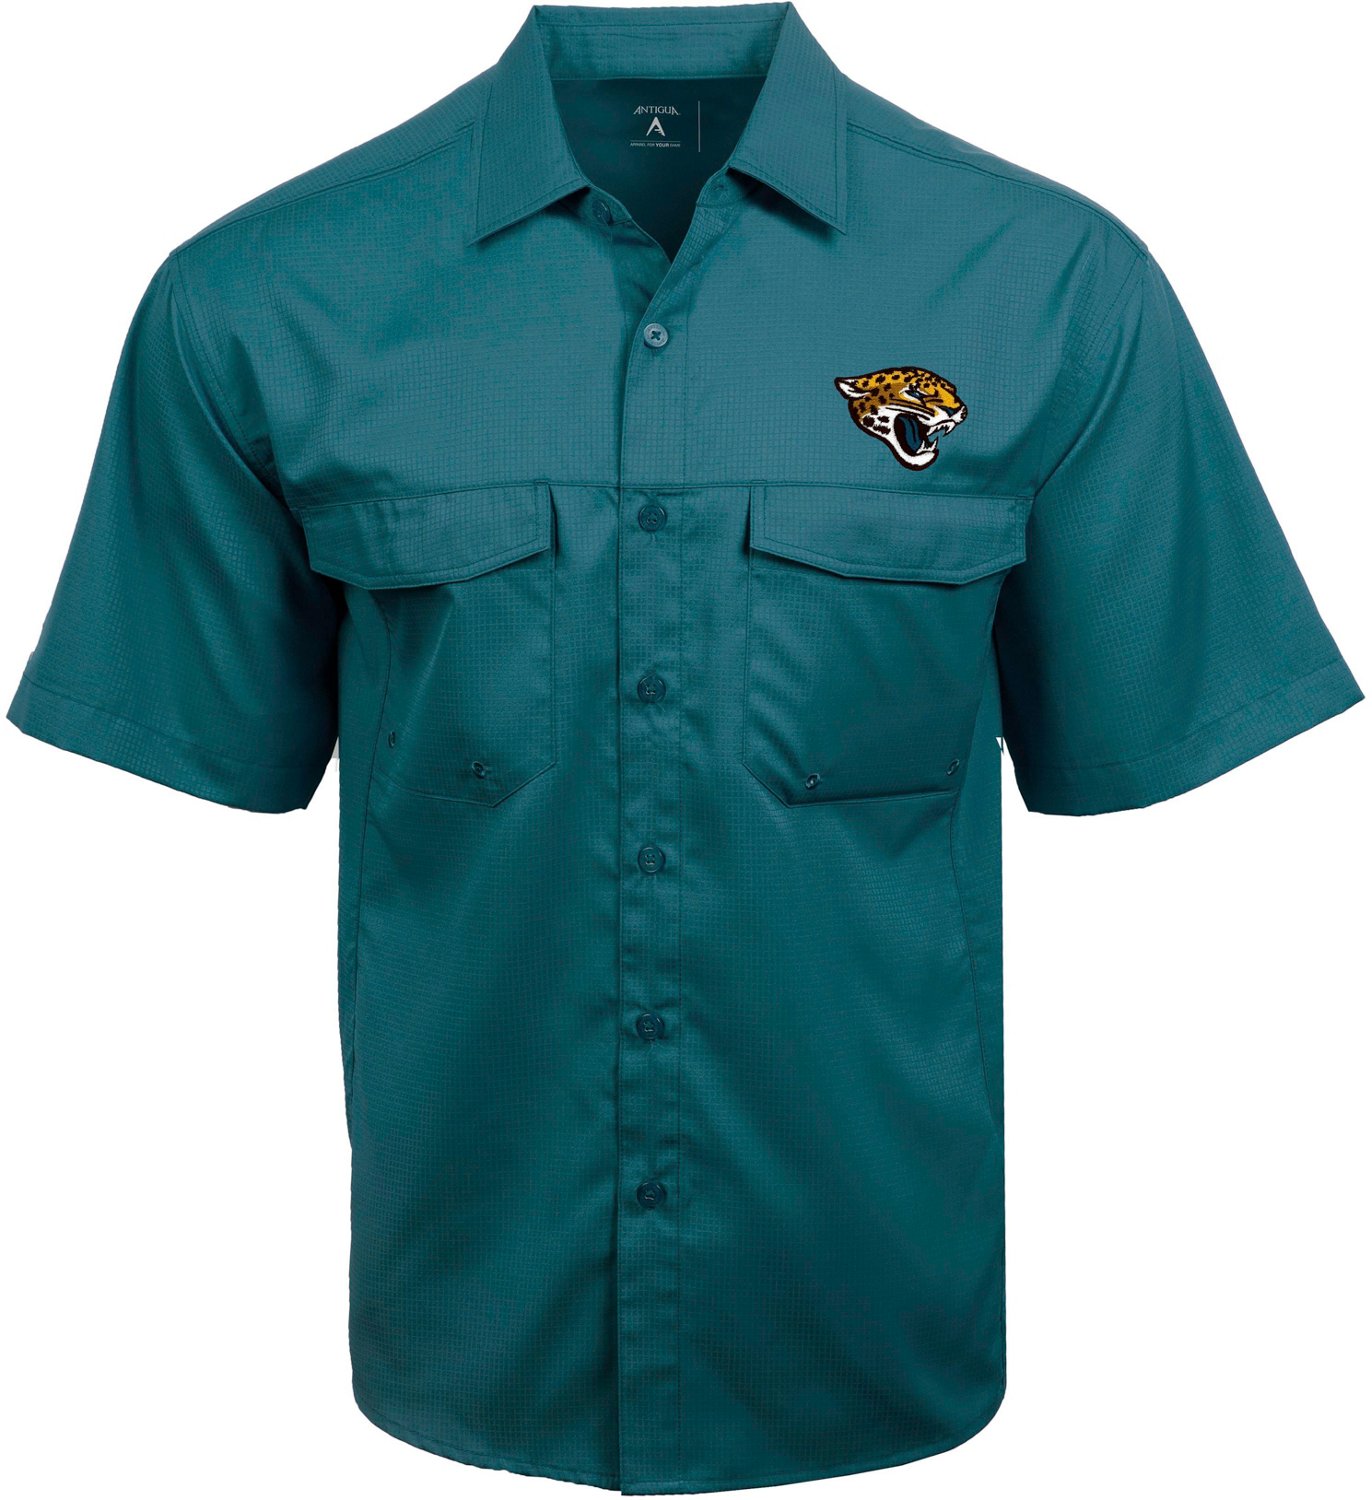 Antigua Men's Jacksonville Jaguars Game Day Woven Fishing Shirt